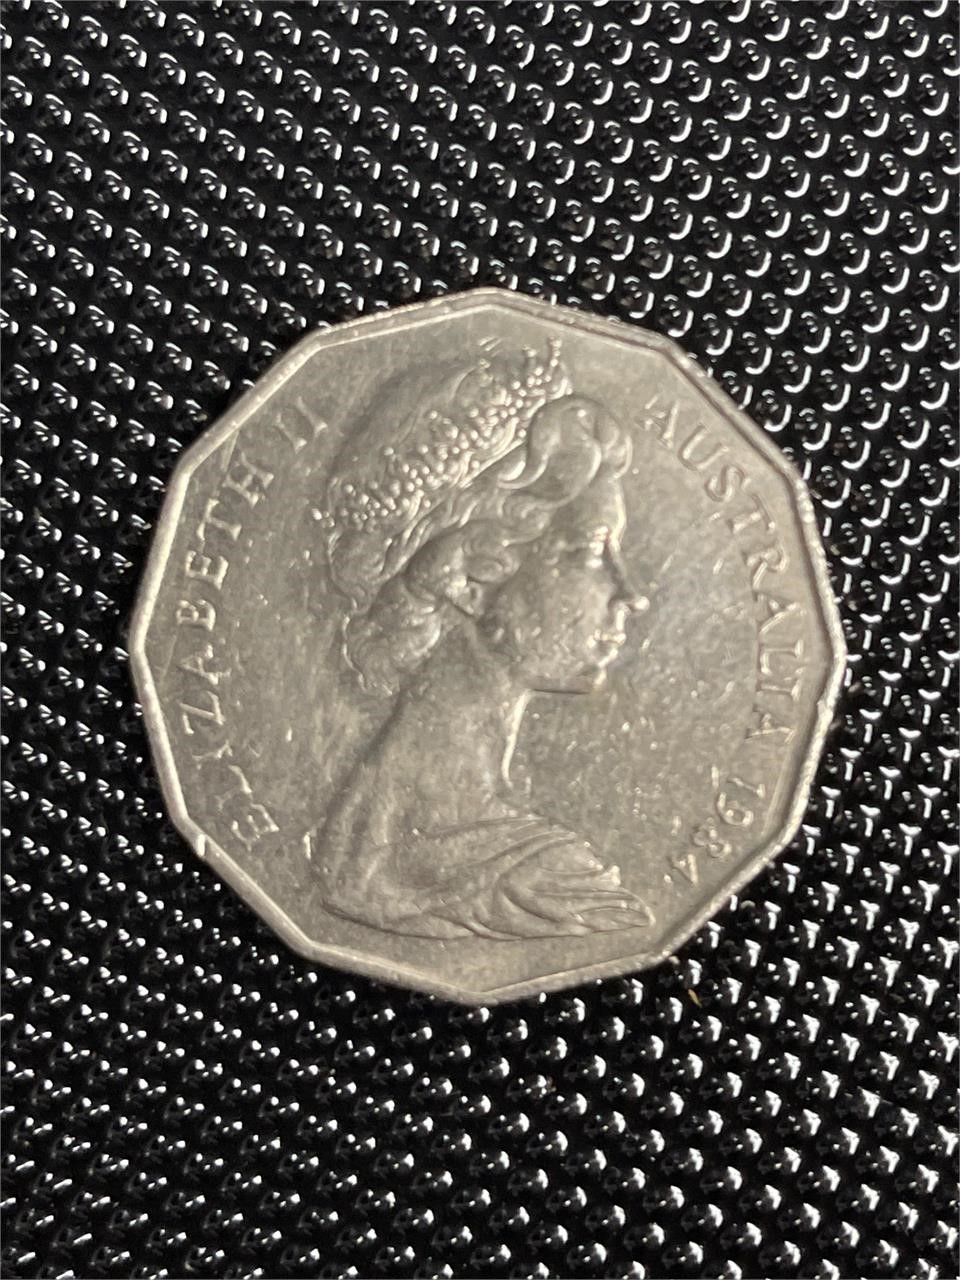 1984 AUSTRALIA 50c coin